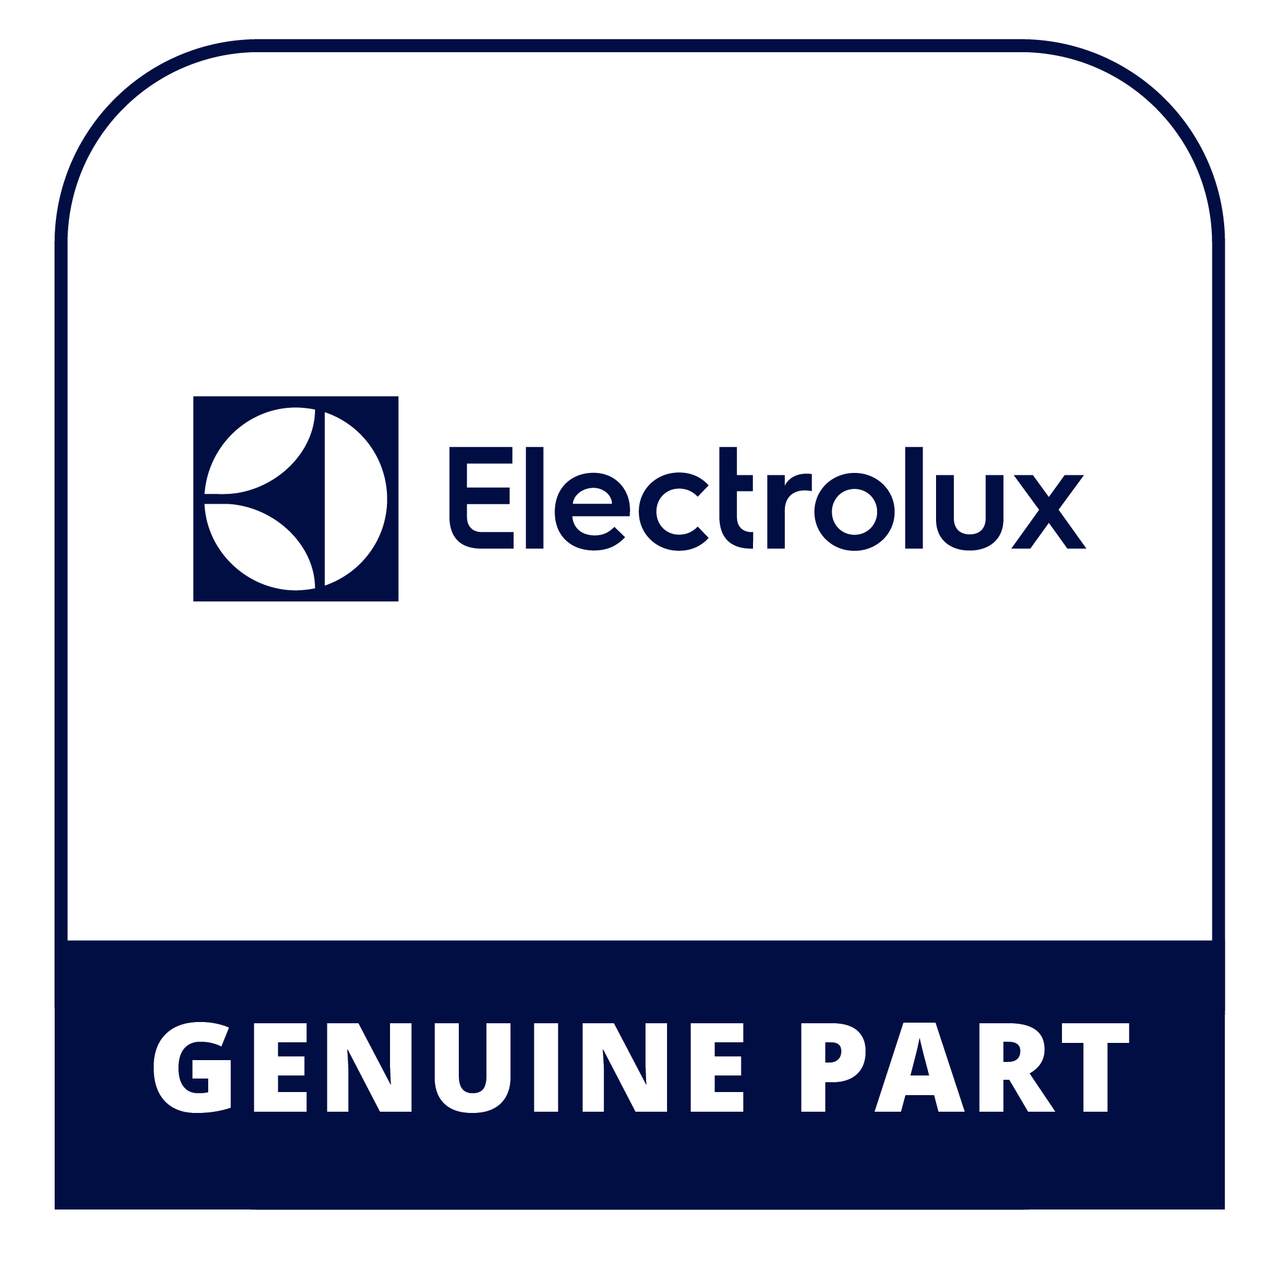 Frigidaire - Electrolux 5304490409 Knob - Genuine Electrolux Part